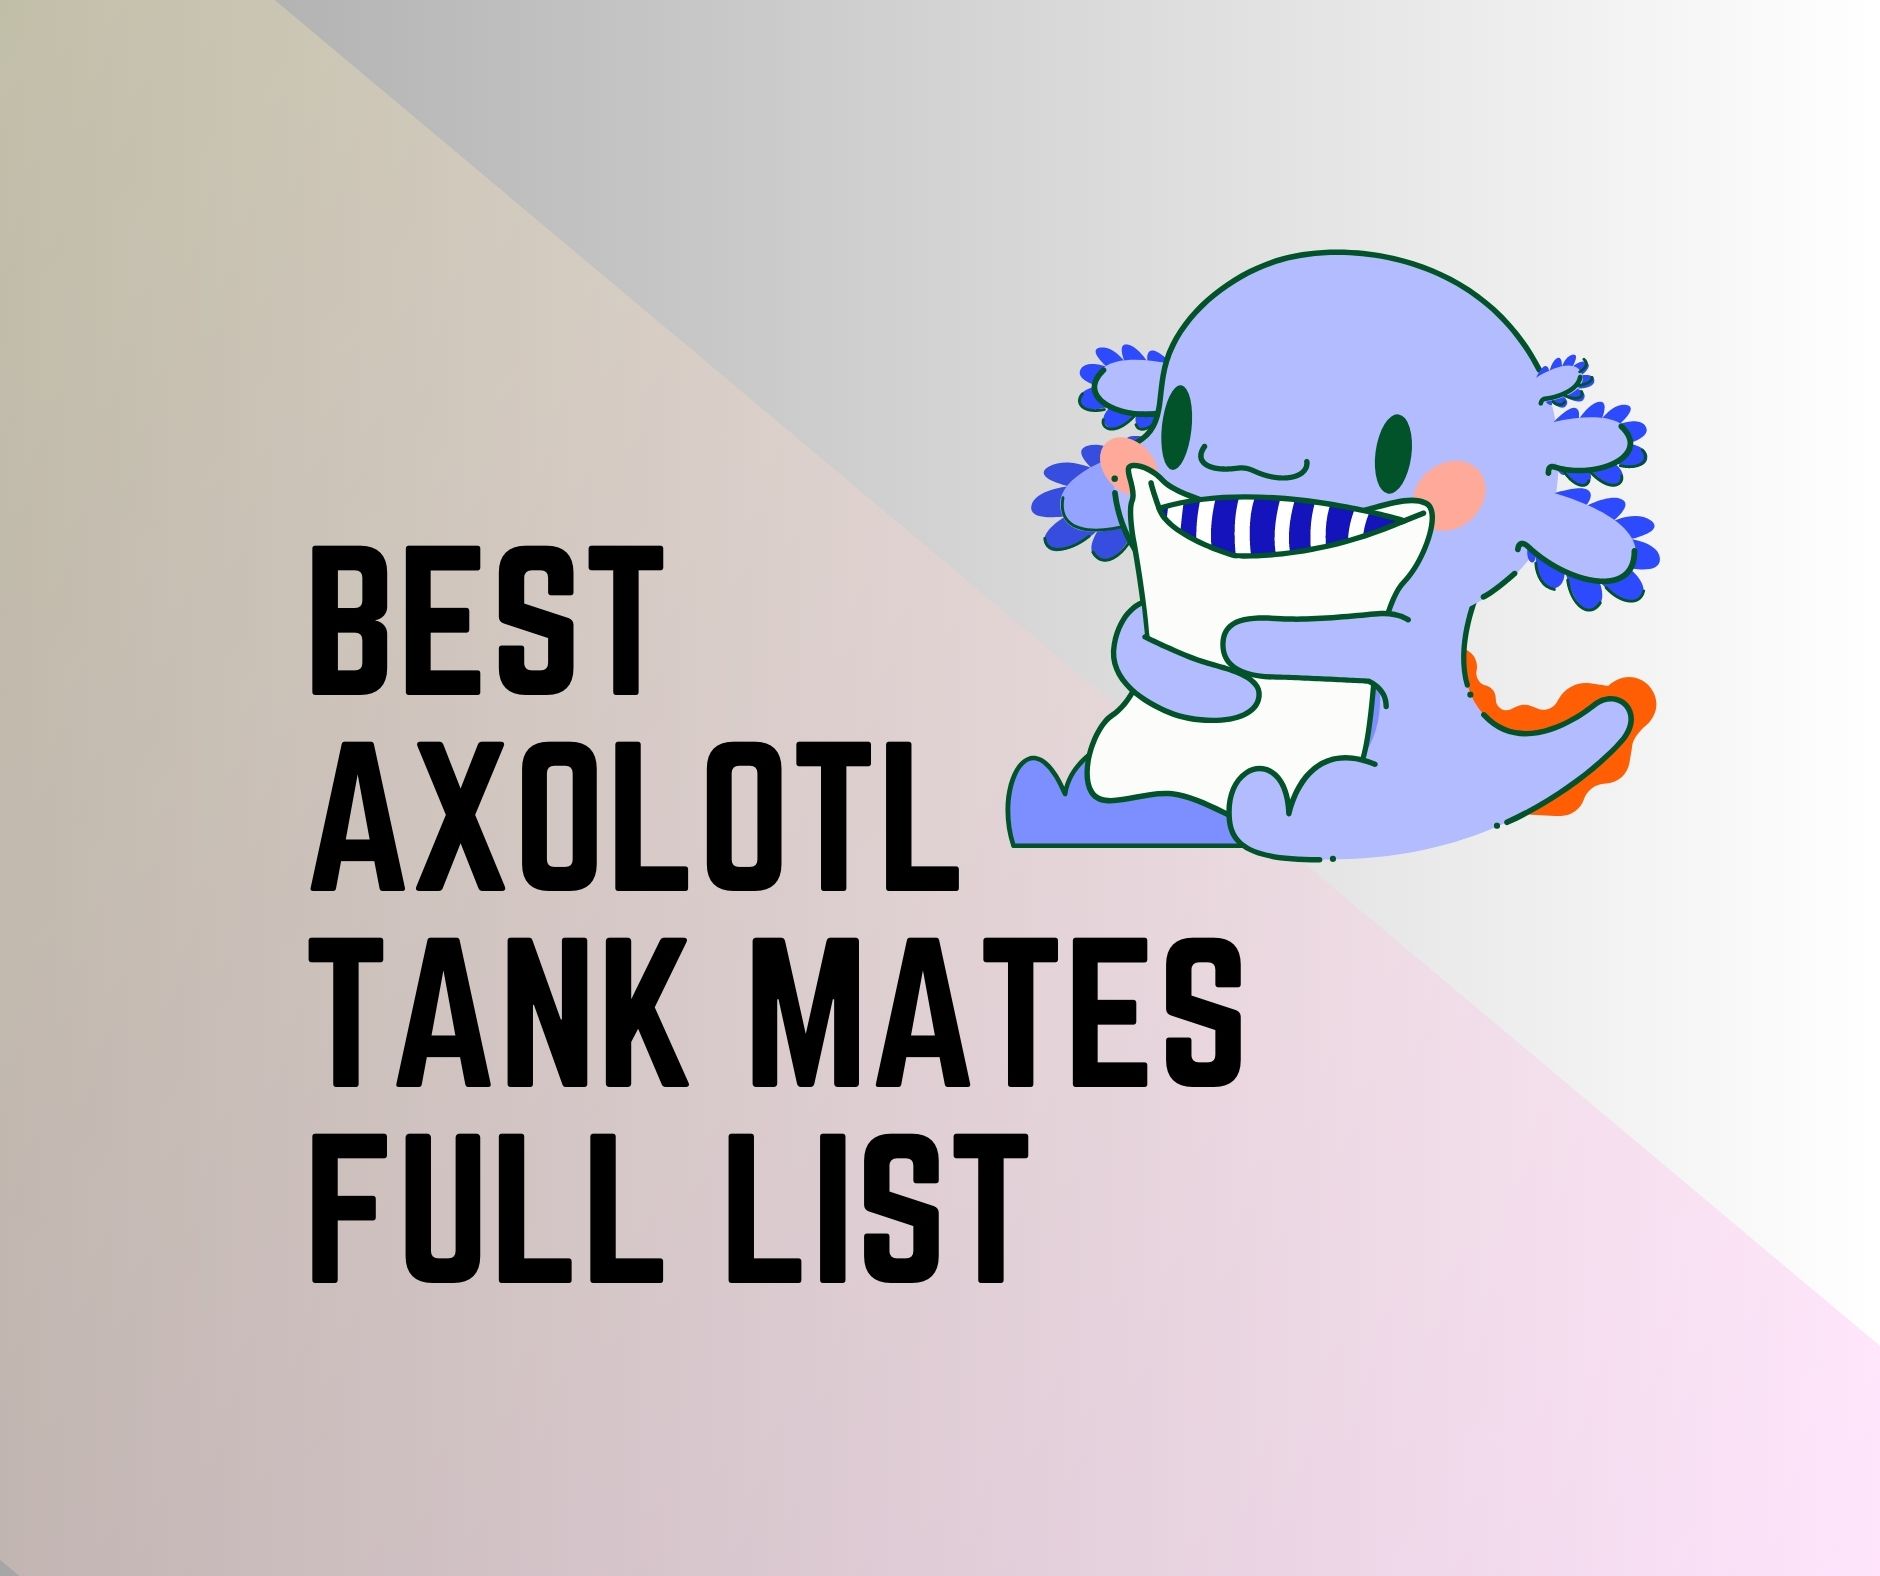 list of axolotl tank mates to consider